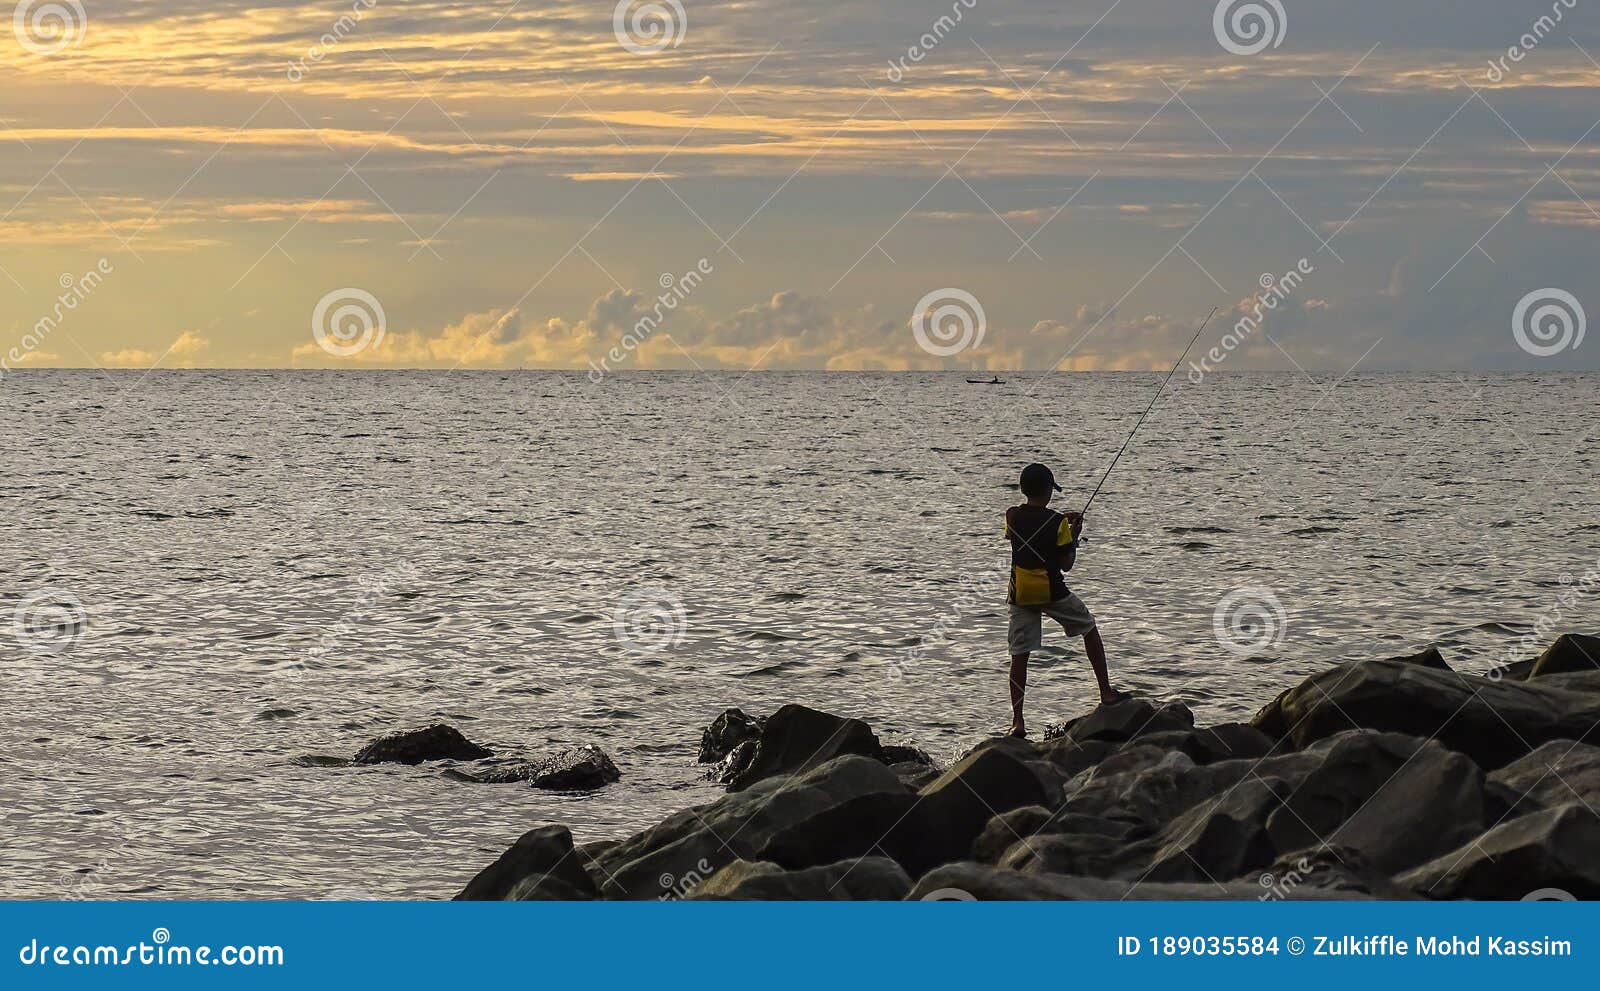 https://thumbs.dreamstime.com/z/young-boy-home-fishing-rod-peace-park-layang-layangan-beach-labuan-pearl-borneo-malaysia-189035584.jpg